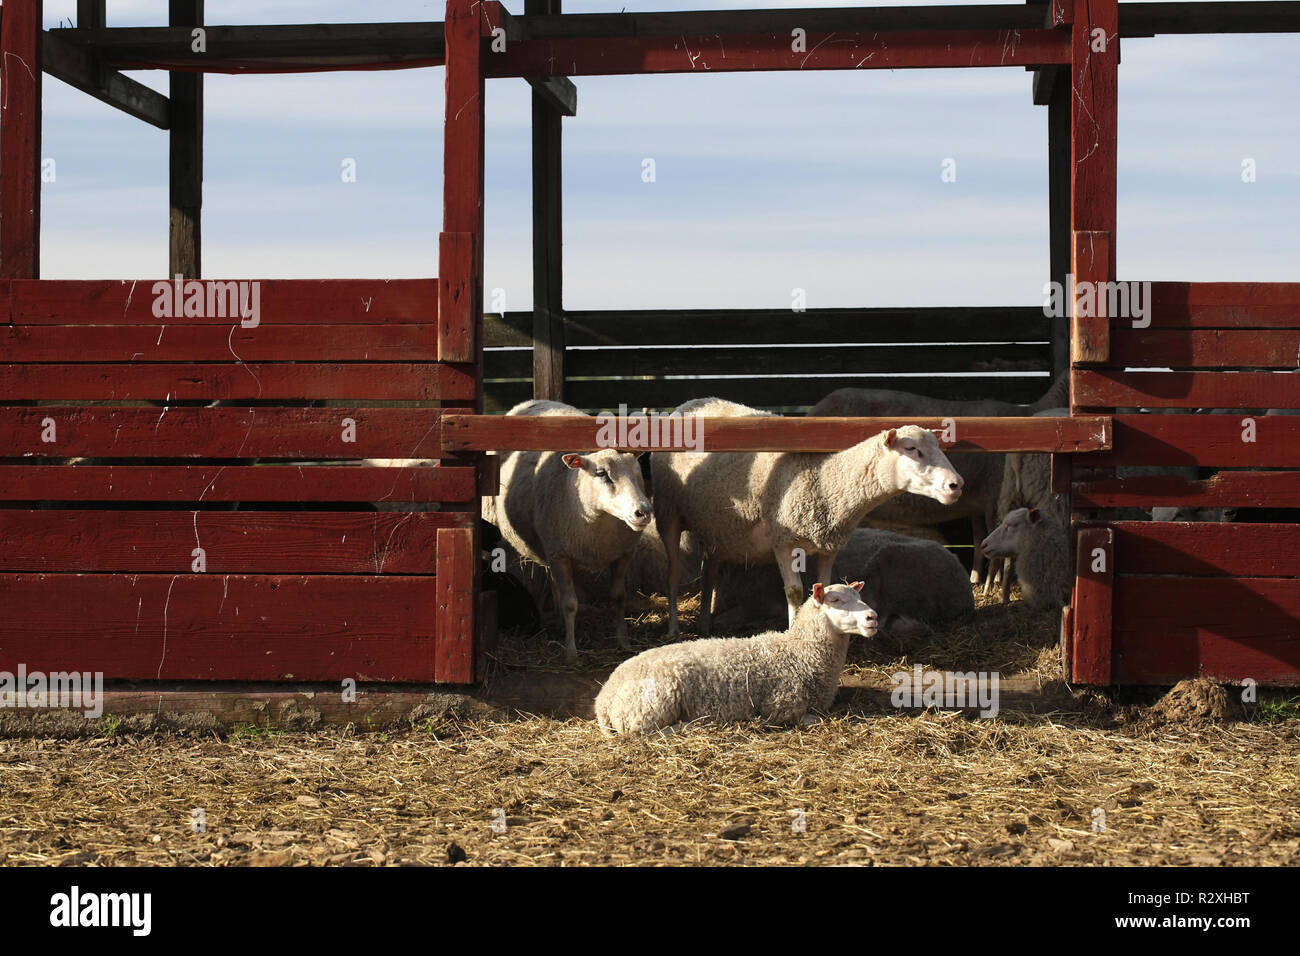 Sheep farming, domestic livestock of lambs and eves Stock Photo